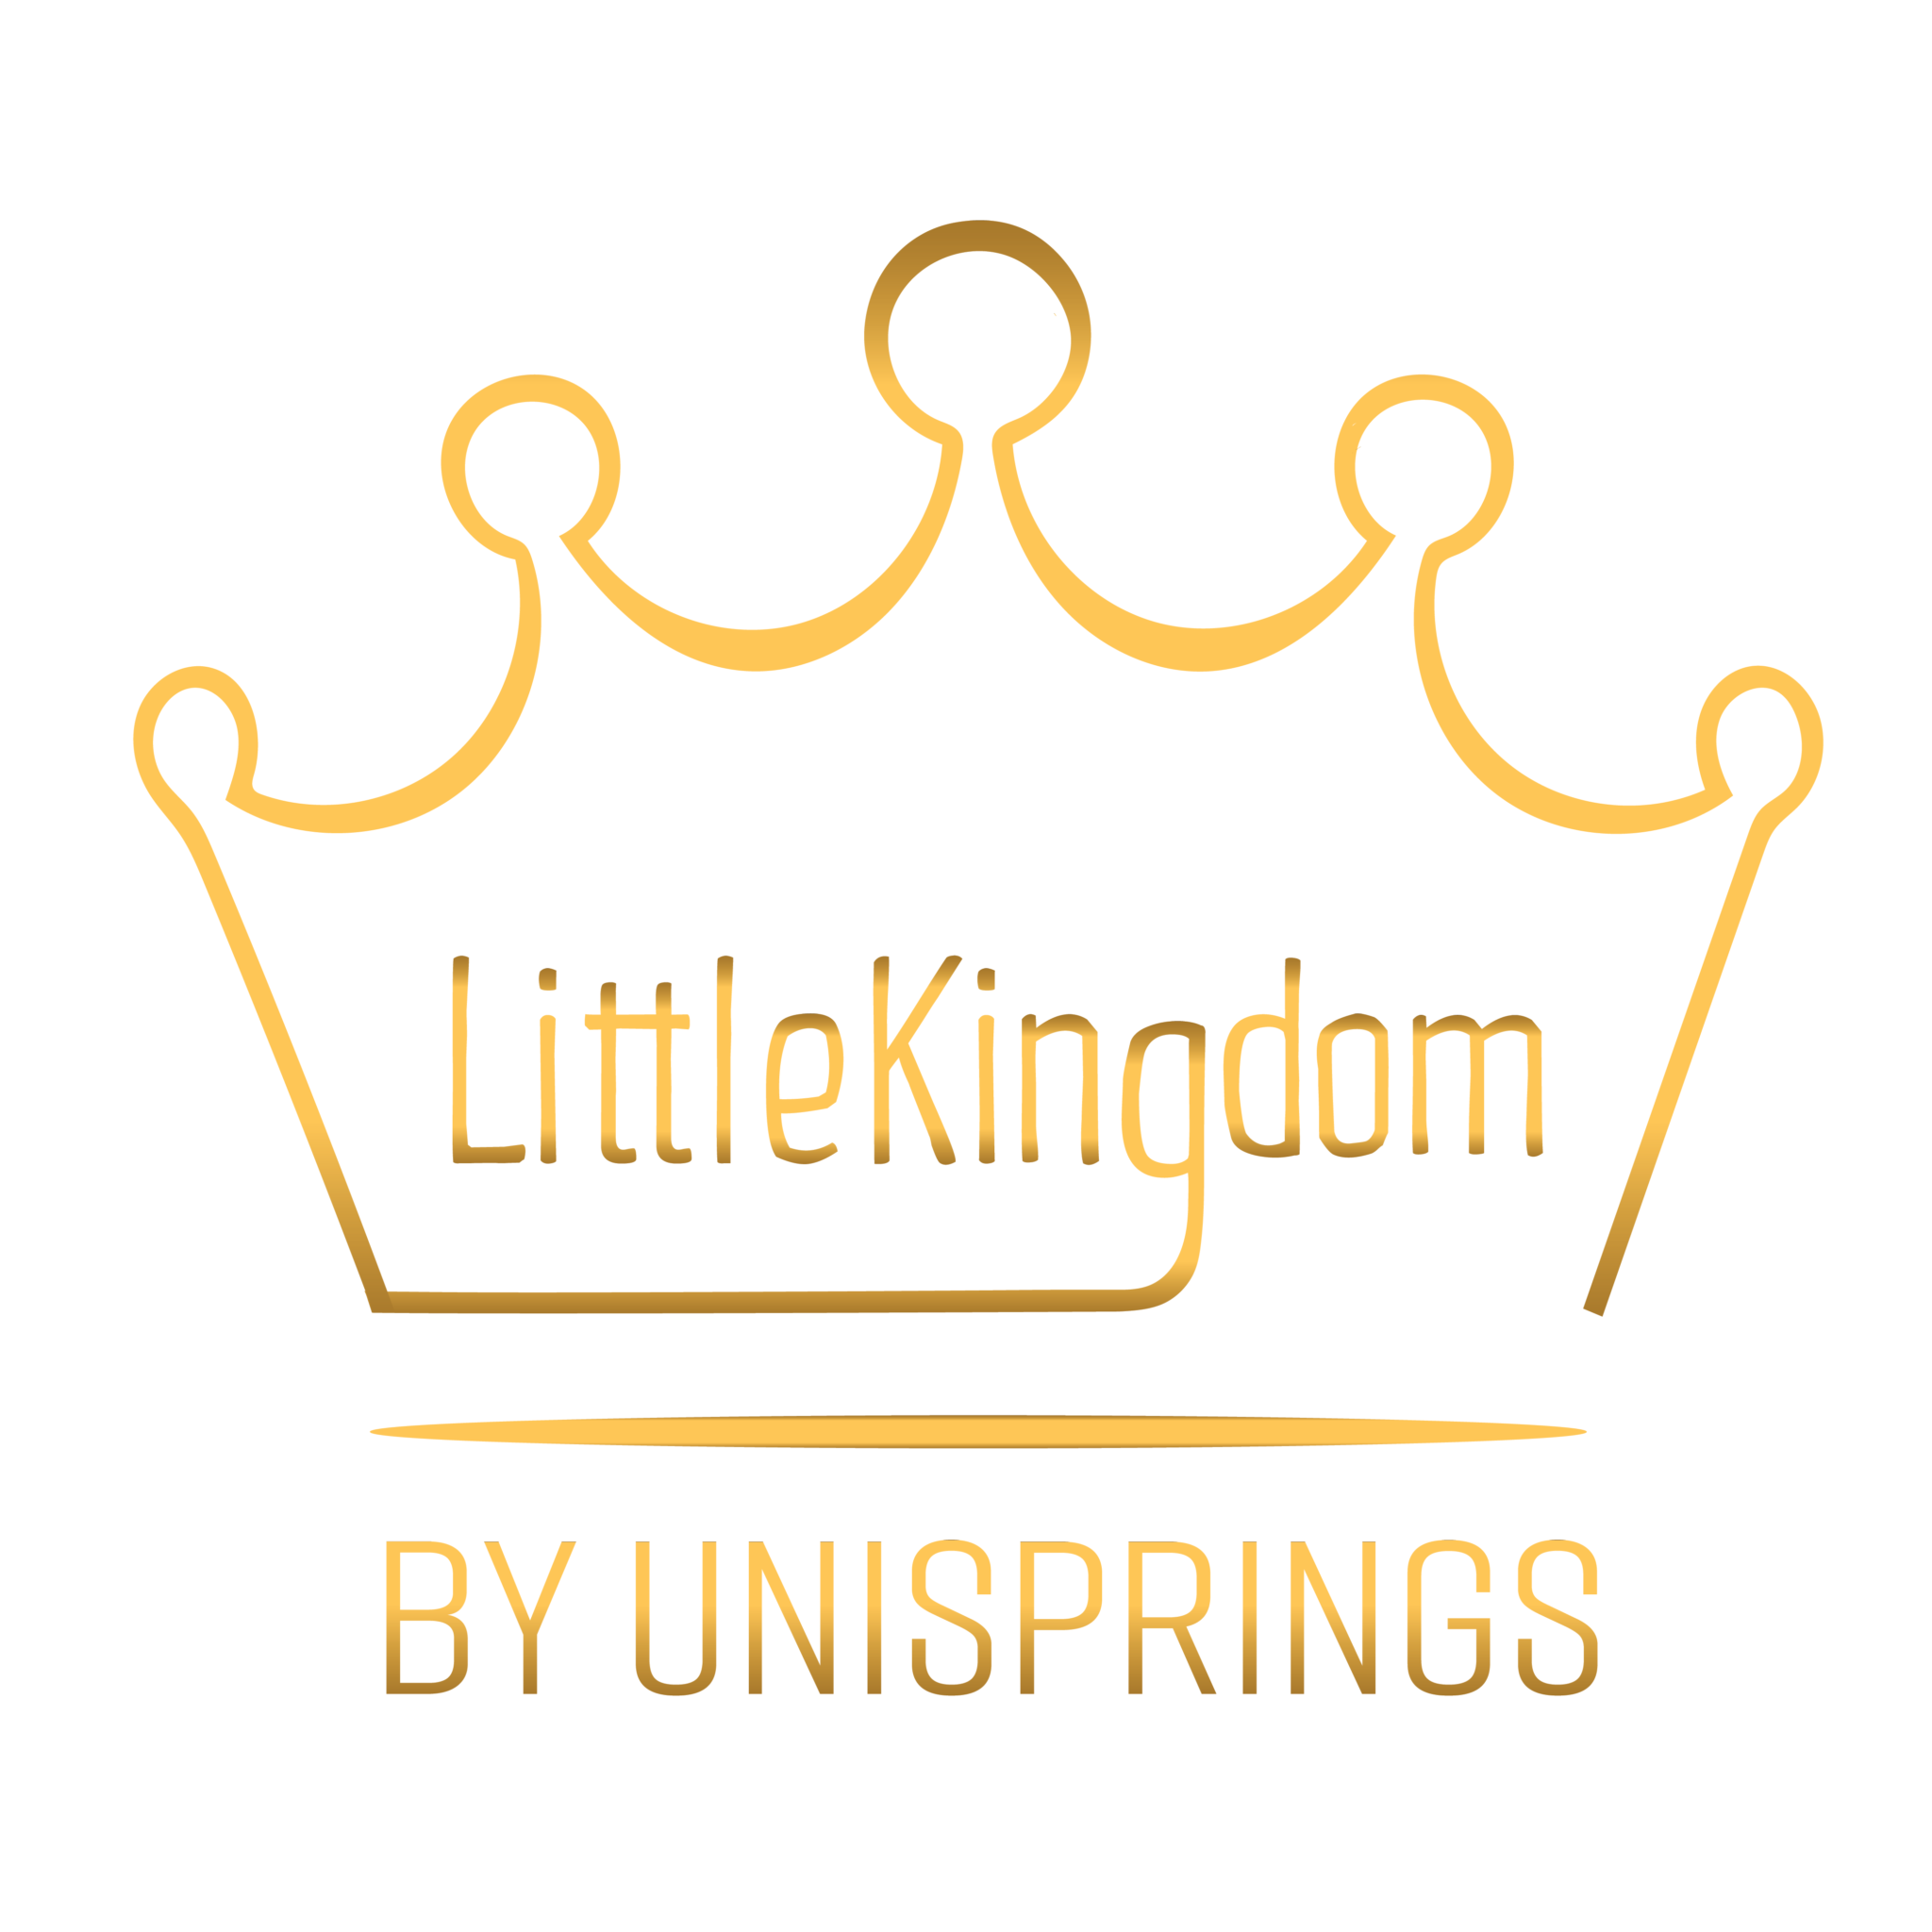 Company Logo For Little Kingdom by Unisprings'